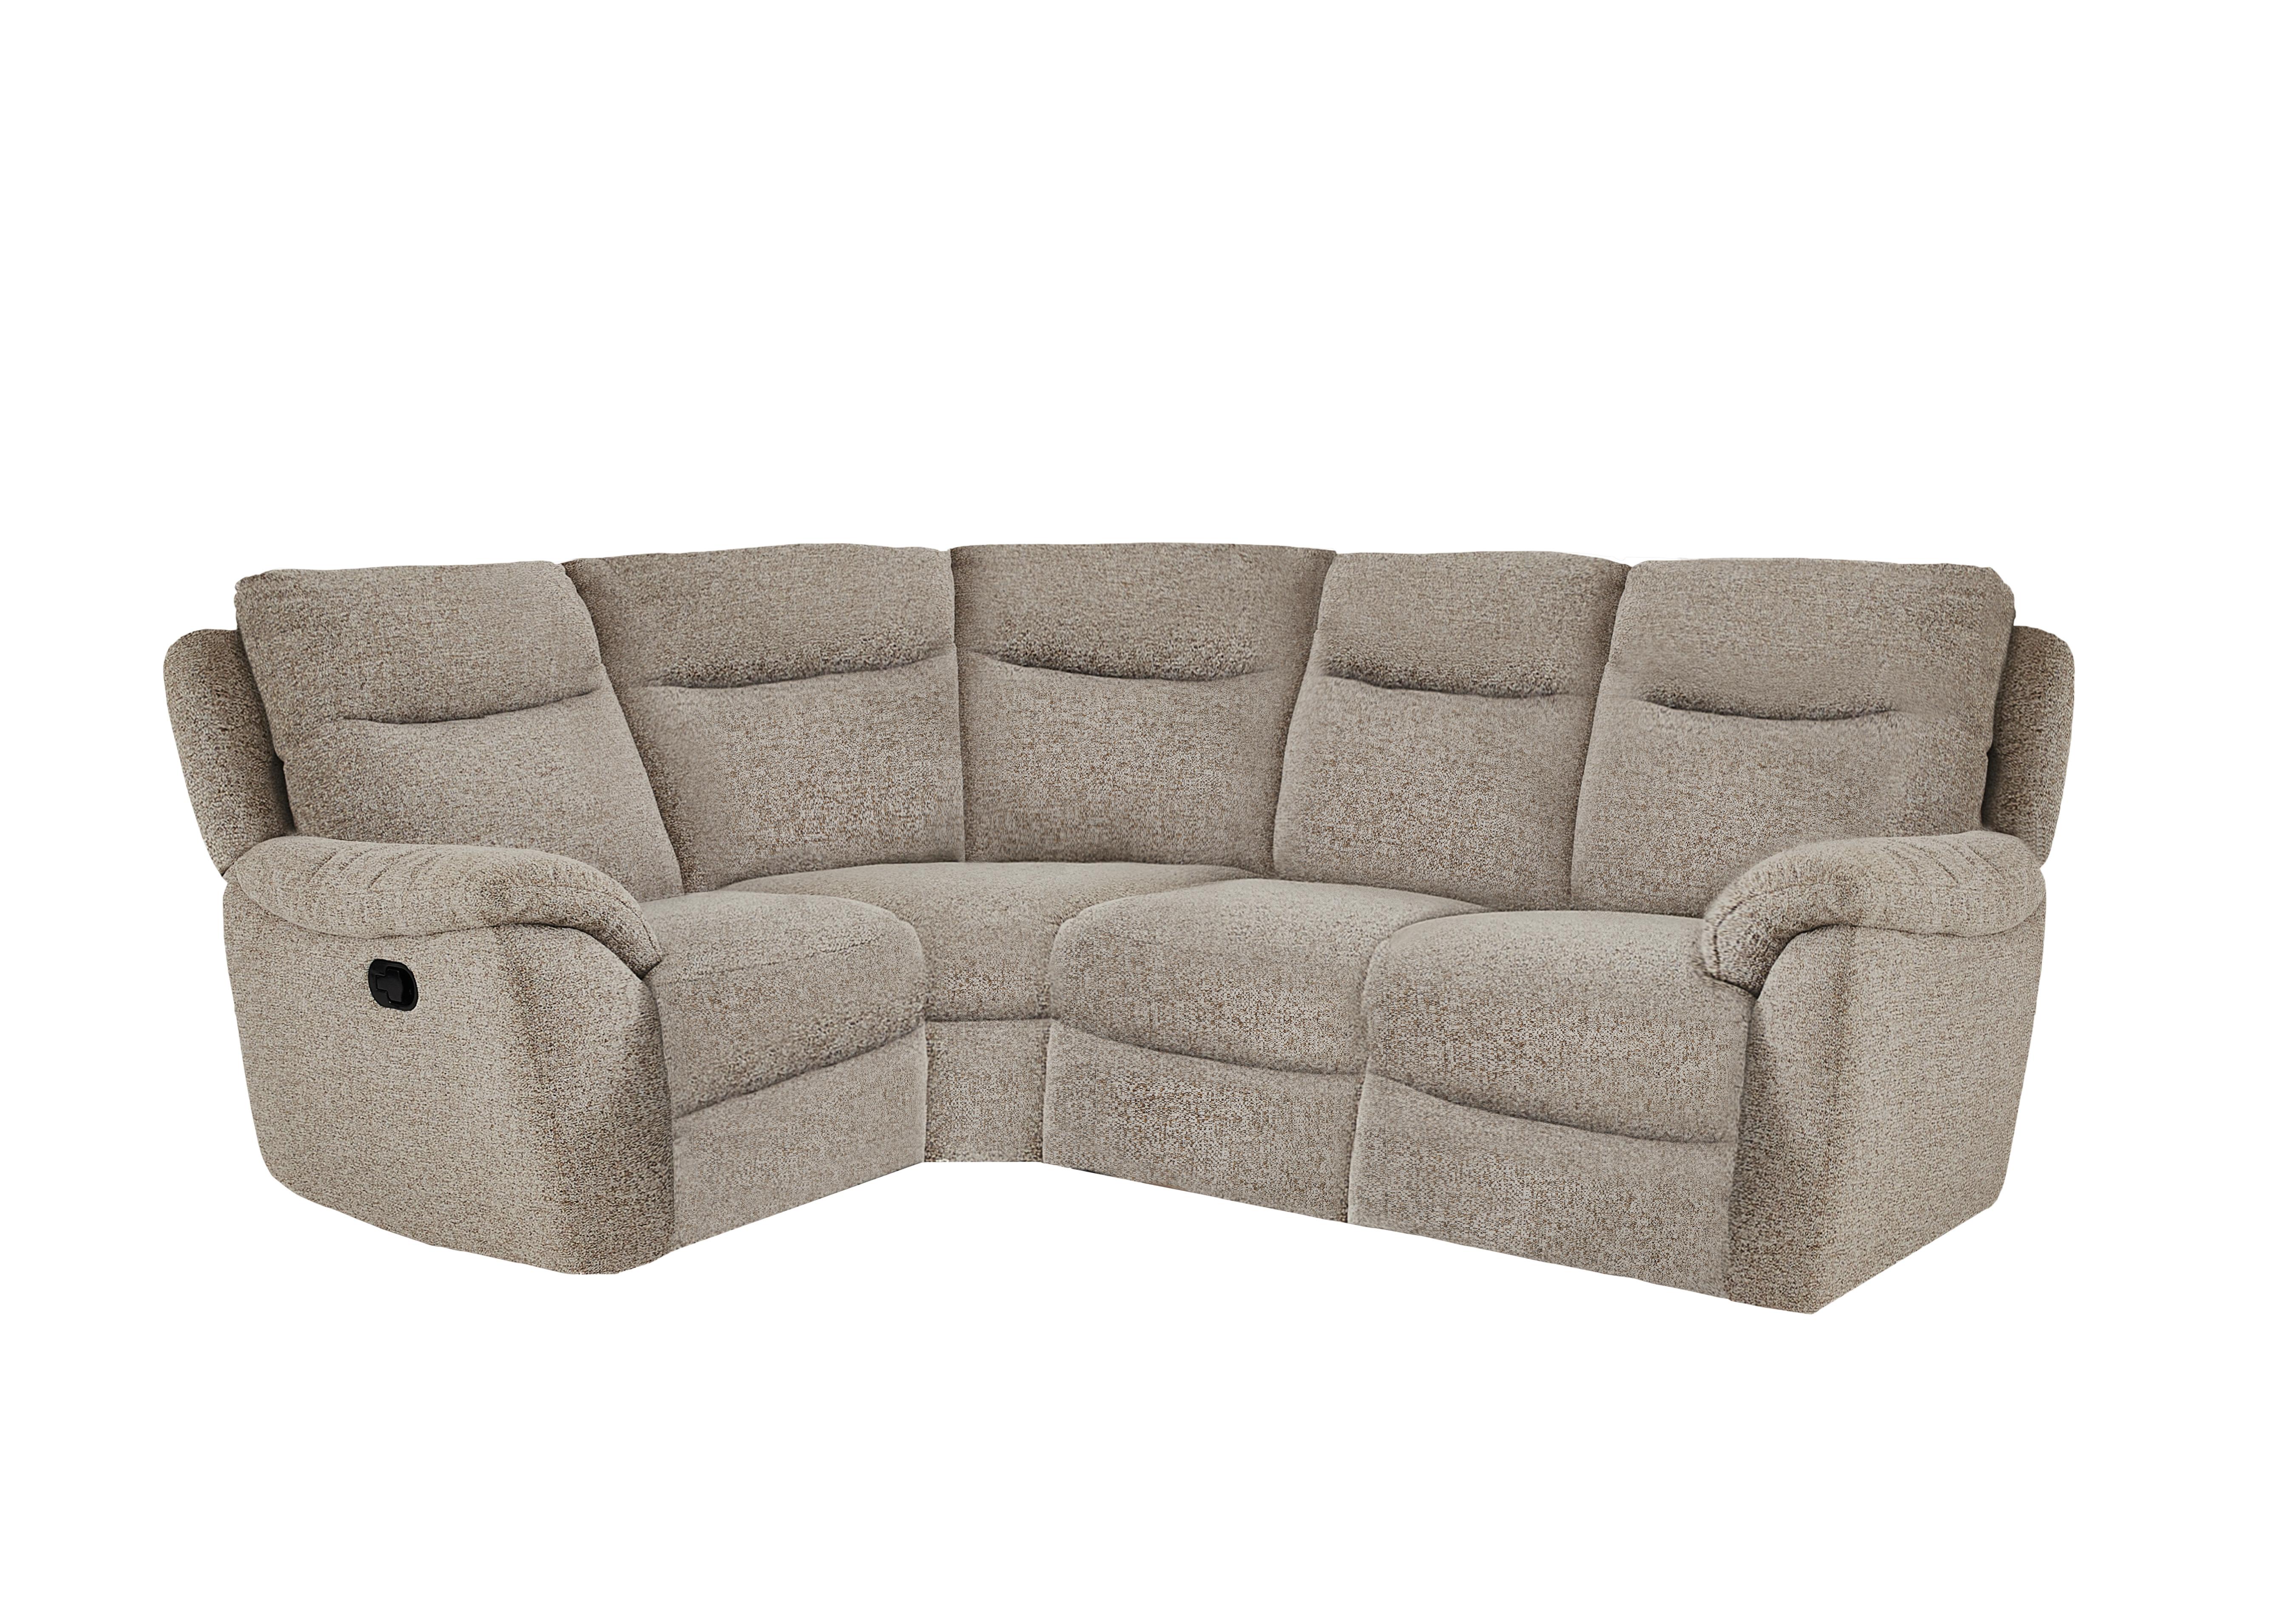 Snug Compact Fabric Corner Sofa in Fab-Chl-R25 Biscuit on Furniture Village